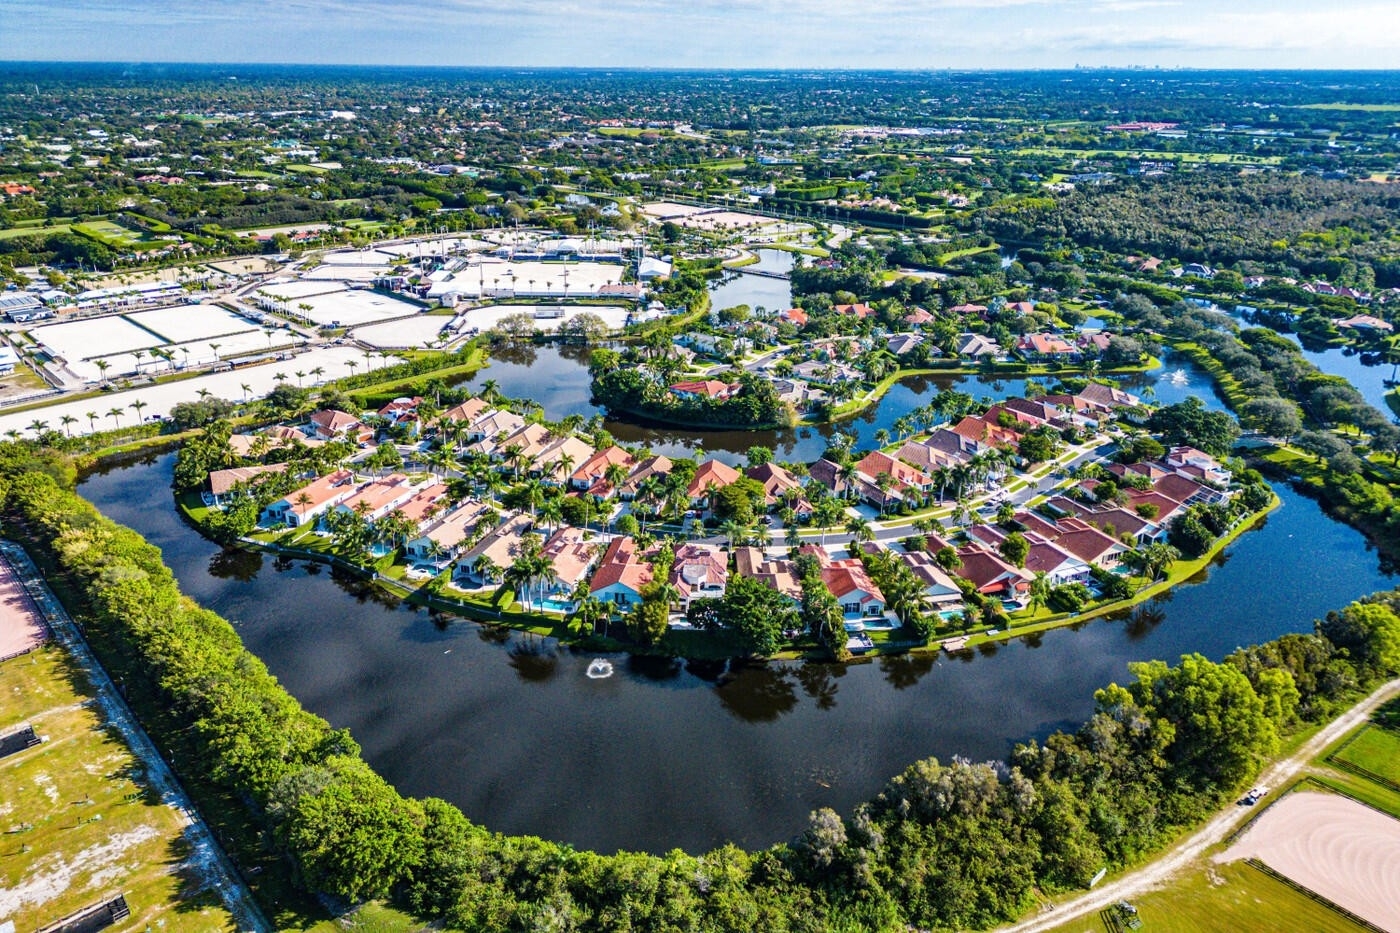 Property at Wellington, Florida 33414